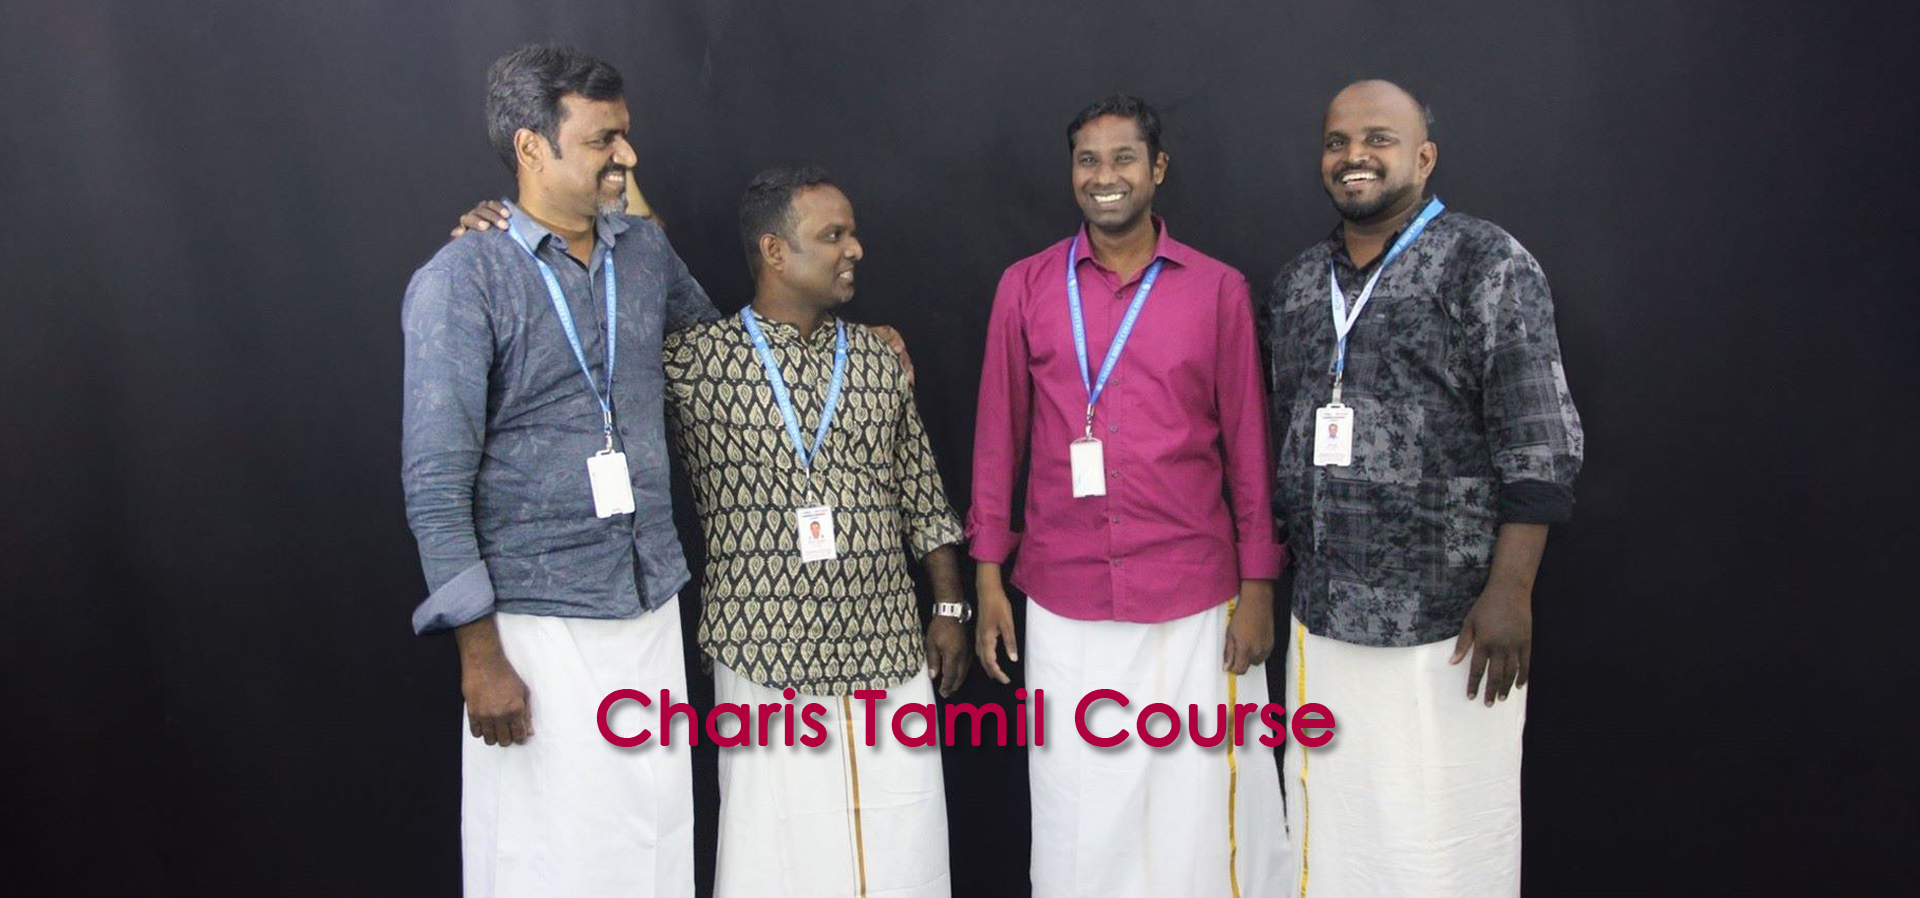 Charis Bible college India